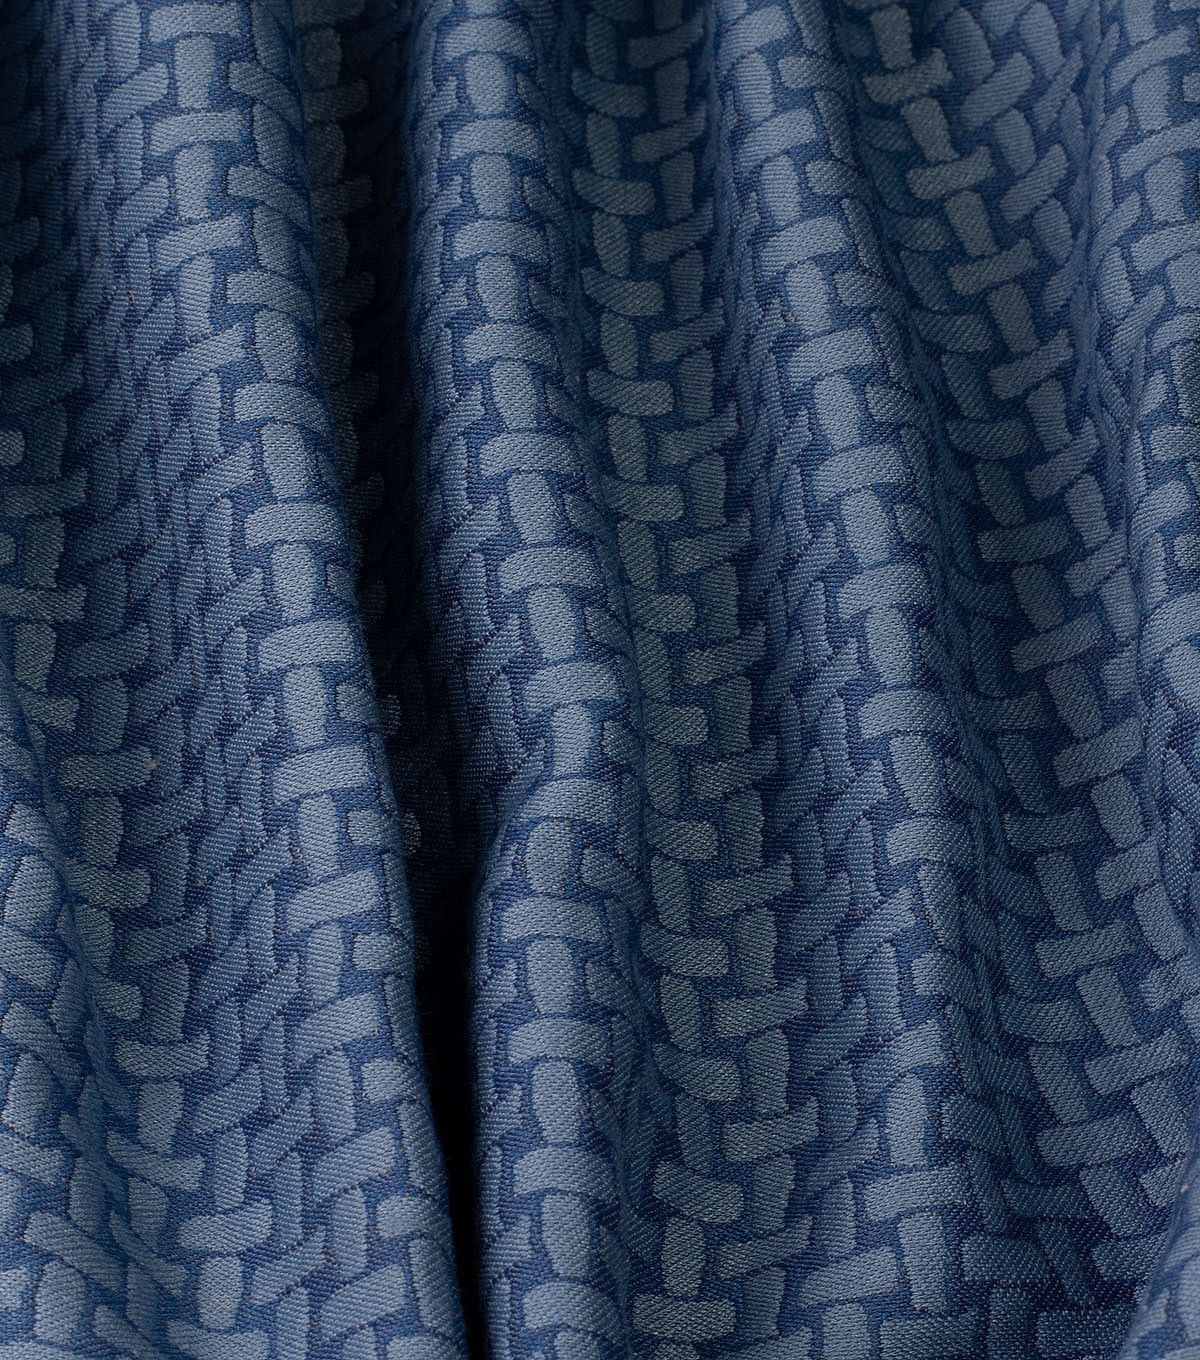 Kelly Ripa Home Upholstery Décor Fabric On Cue Bluebell | JOANN